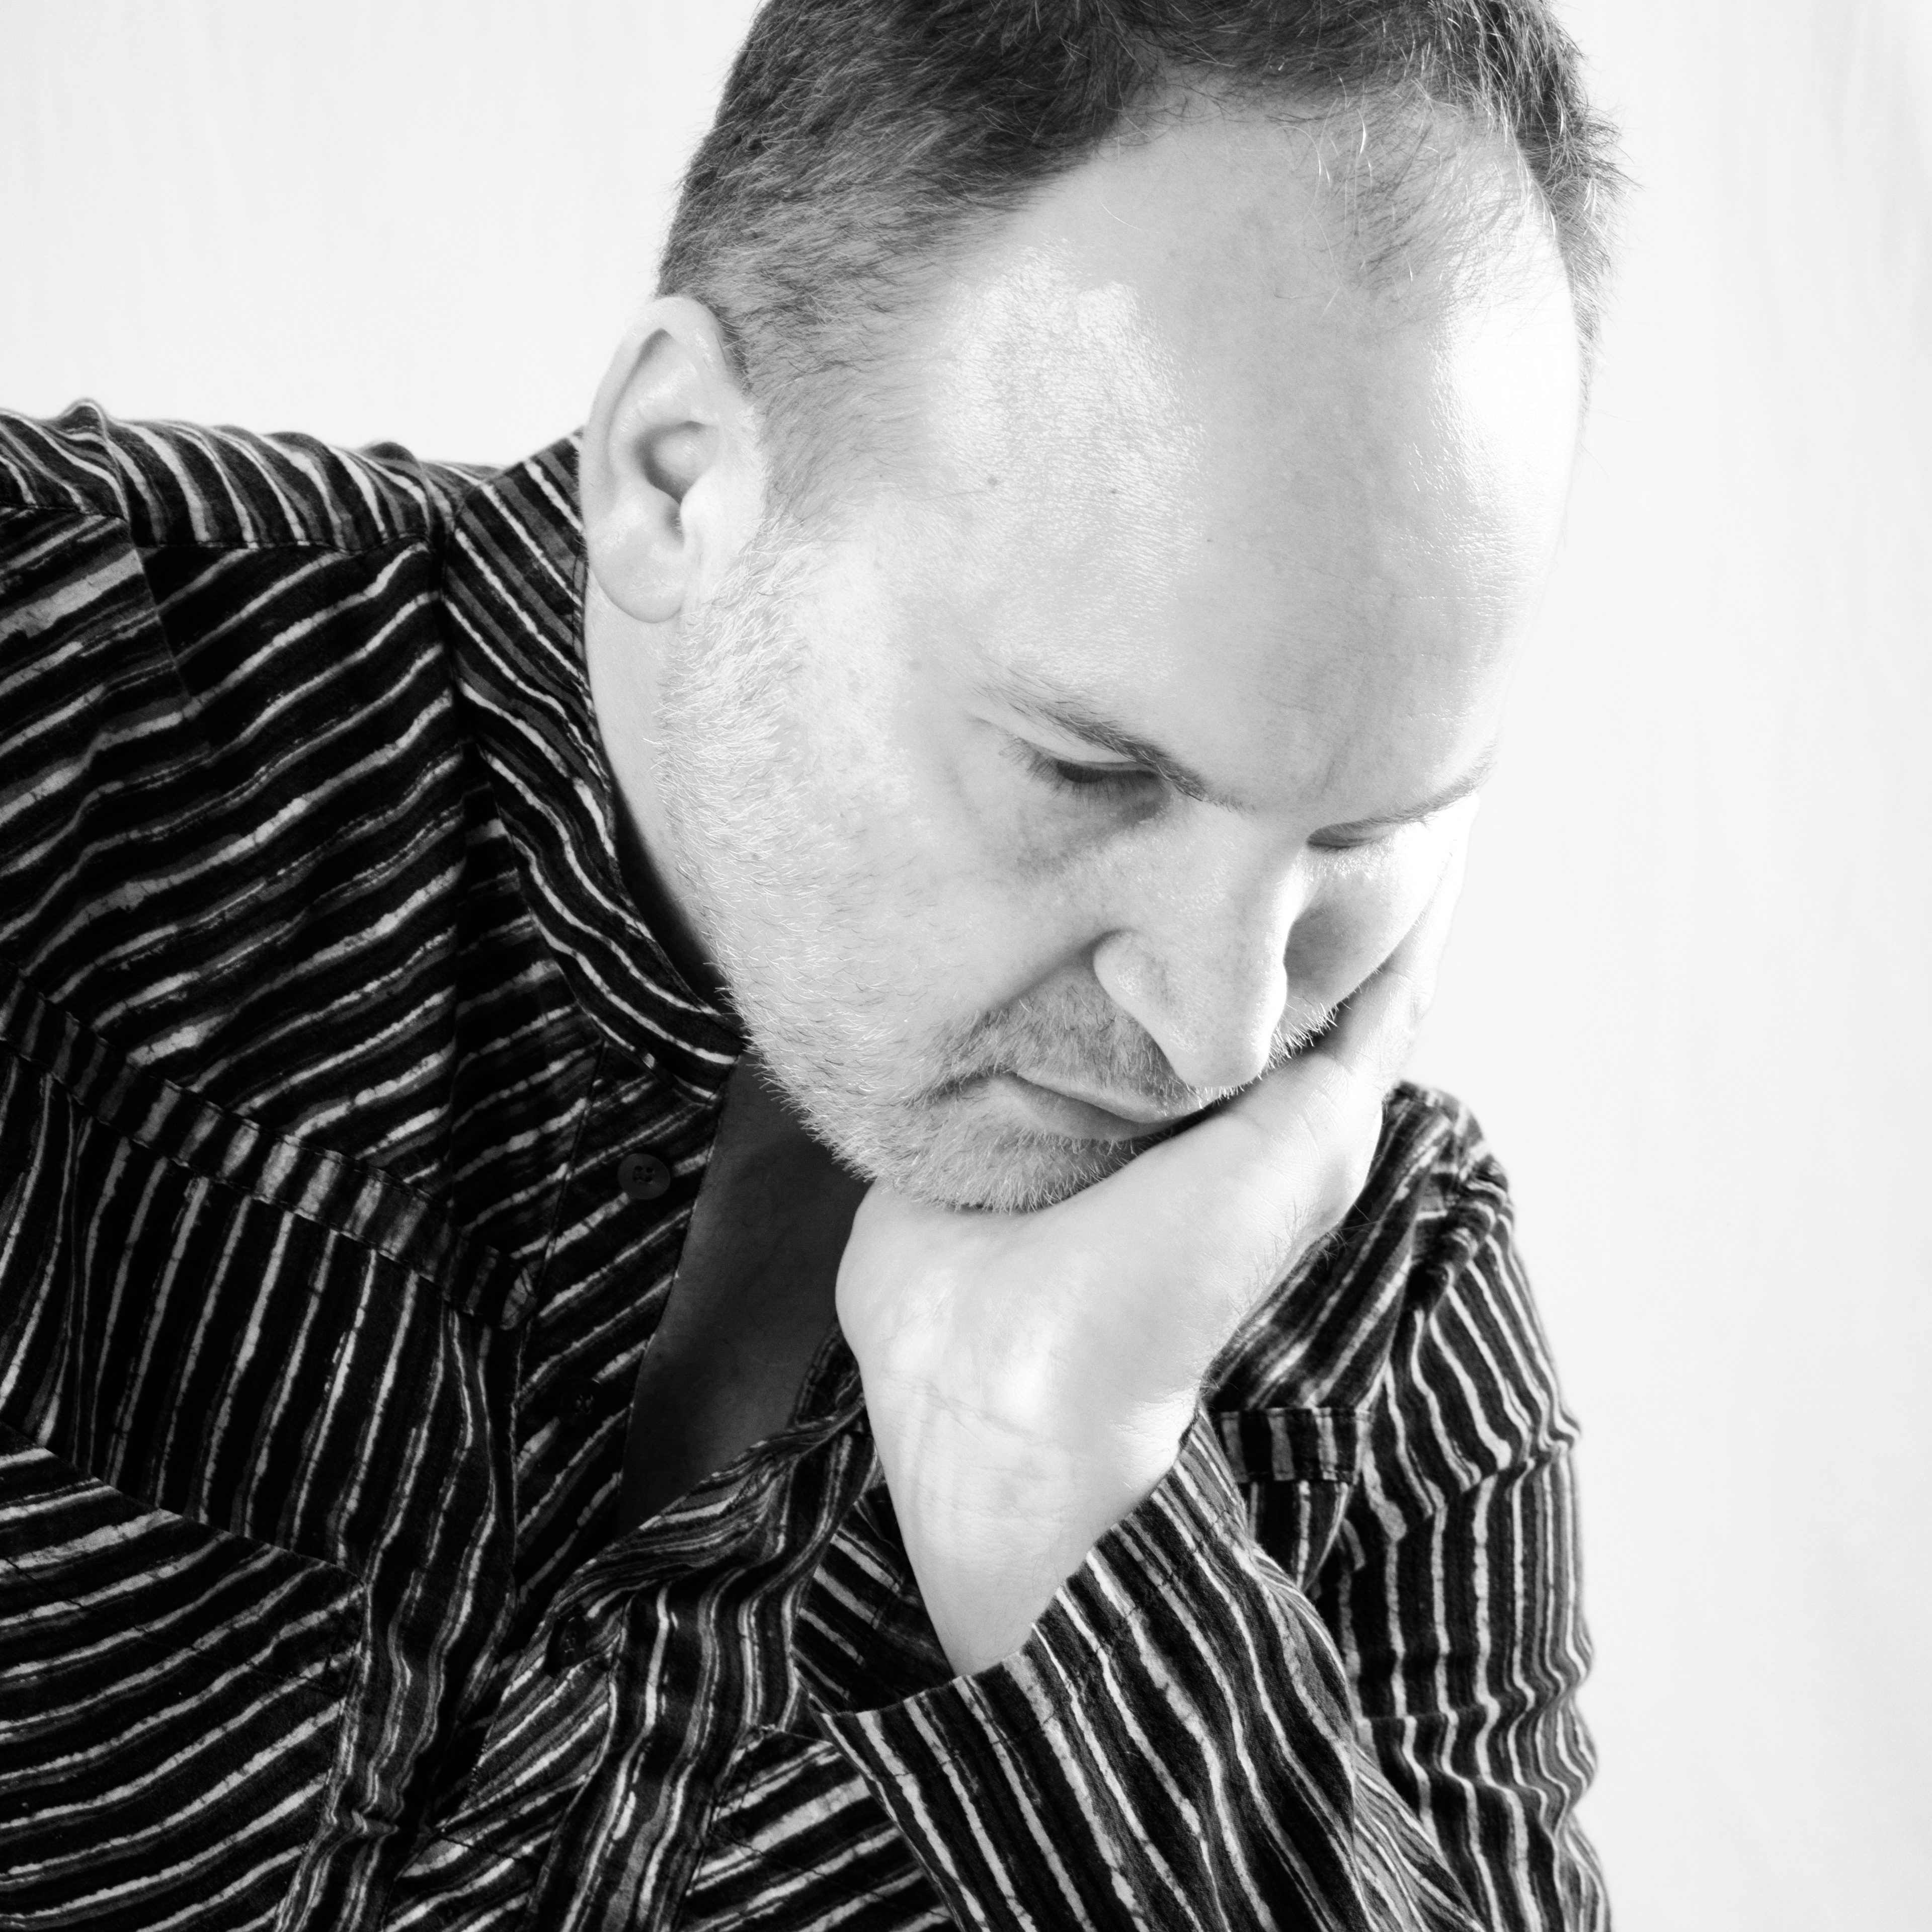 Jason Scholder - Blue Shirt - Thinking - Black and White